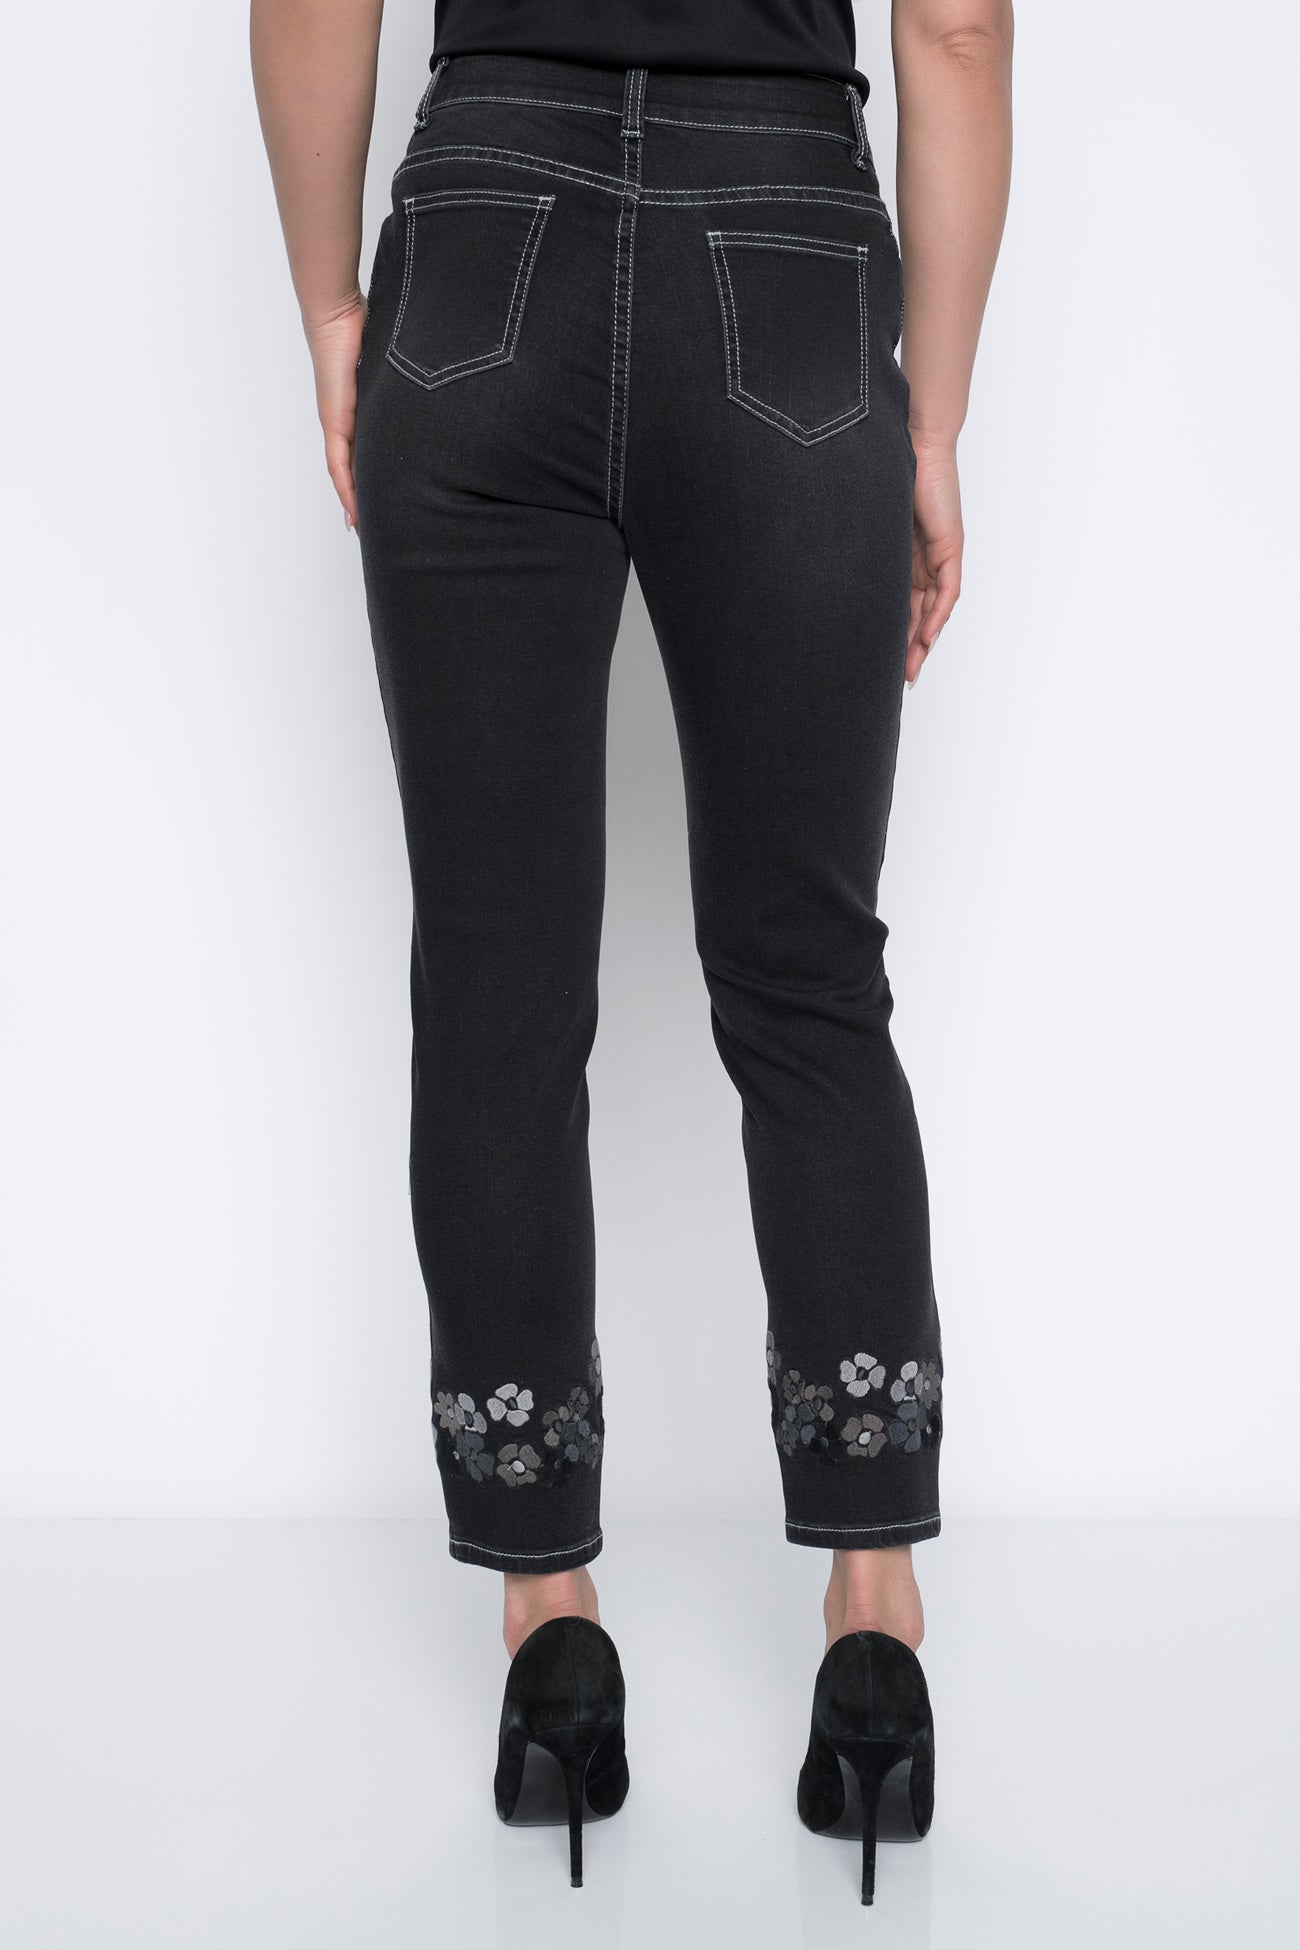 QVC Denim & Co Women's Jeans M High Waist Black Denim Floral Embroidery  30X30